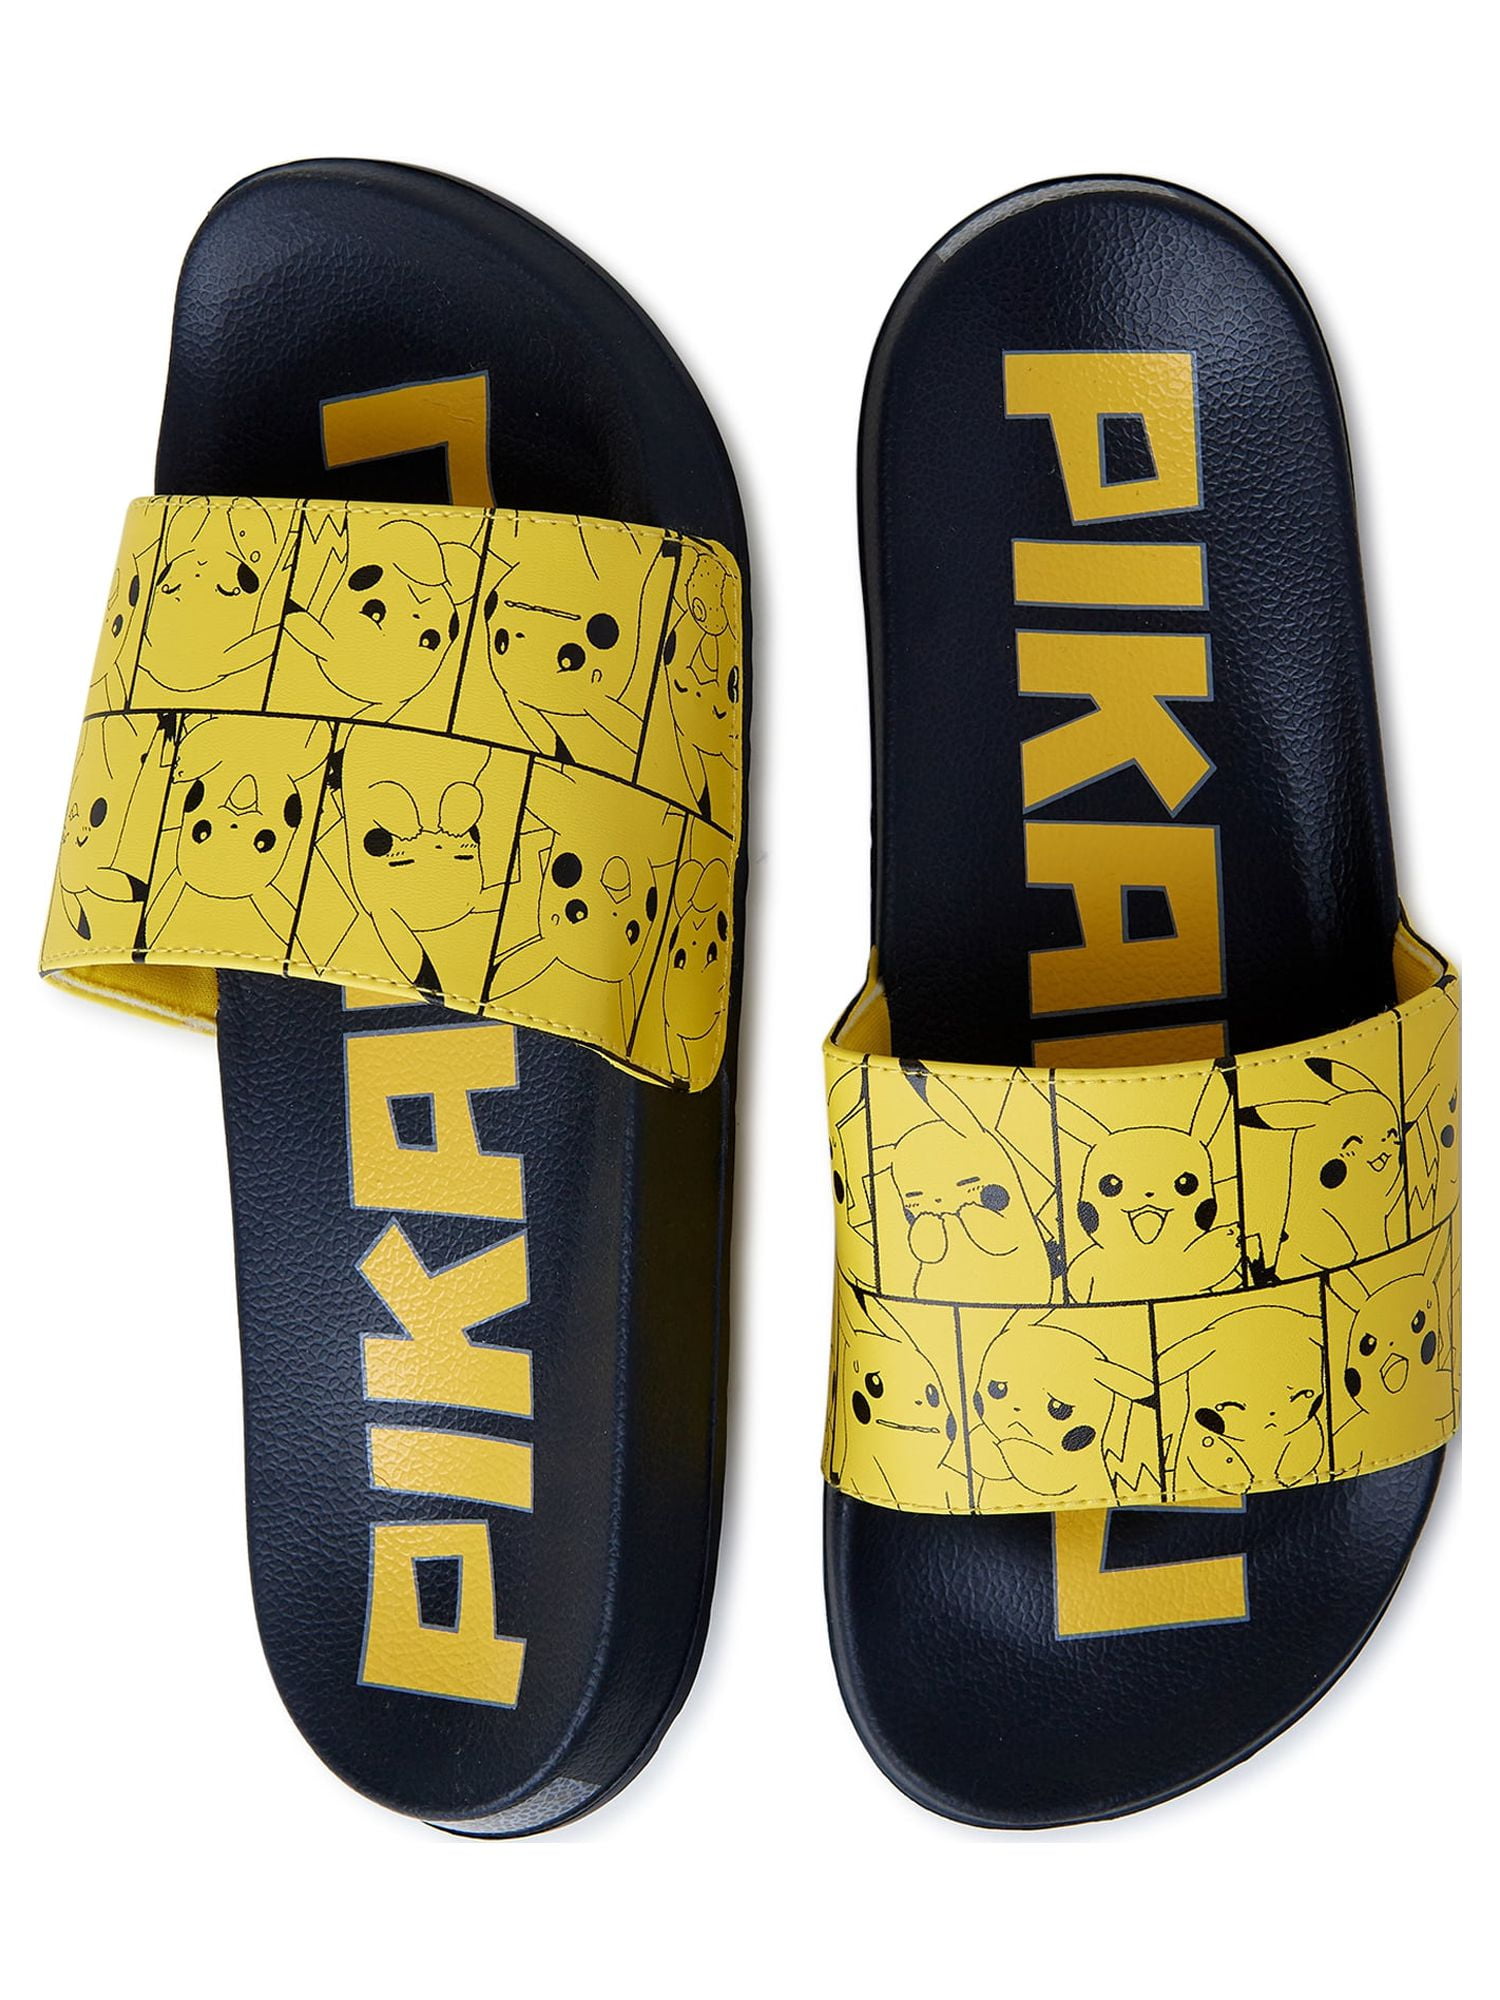 Pokemon Men's Pokemon Pikachu Slide Sandals Size 11 New